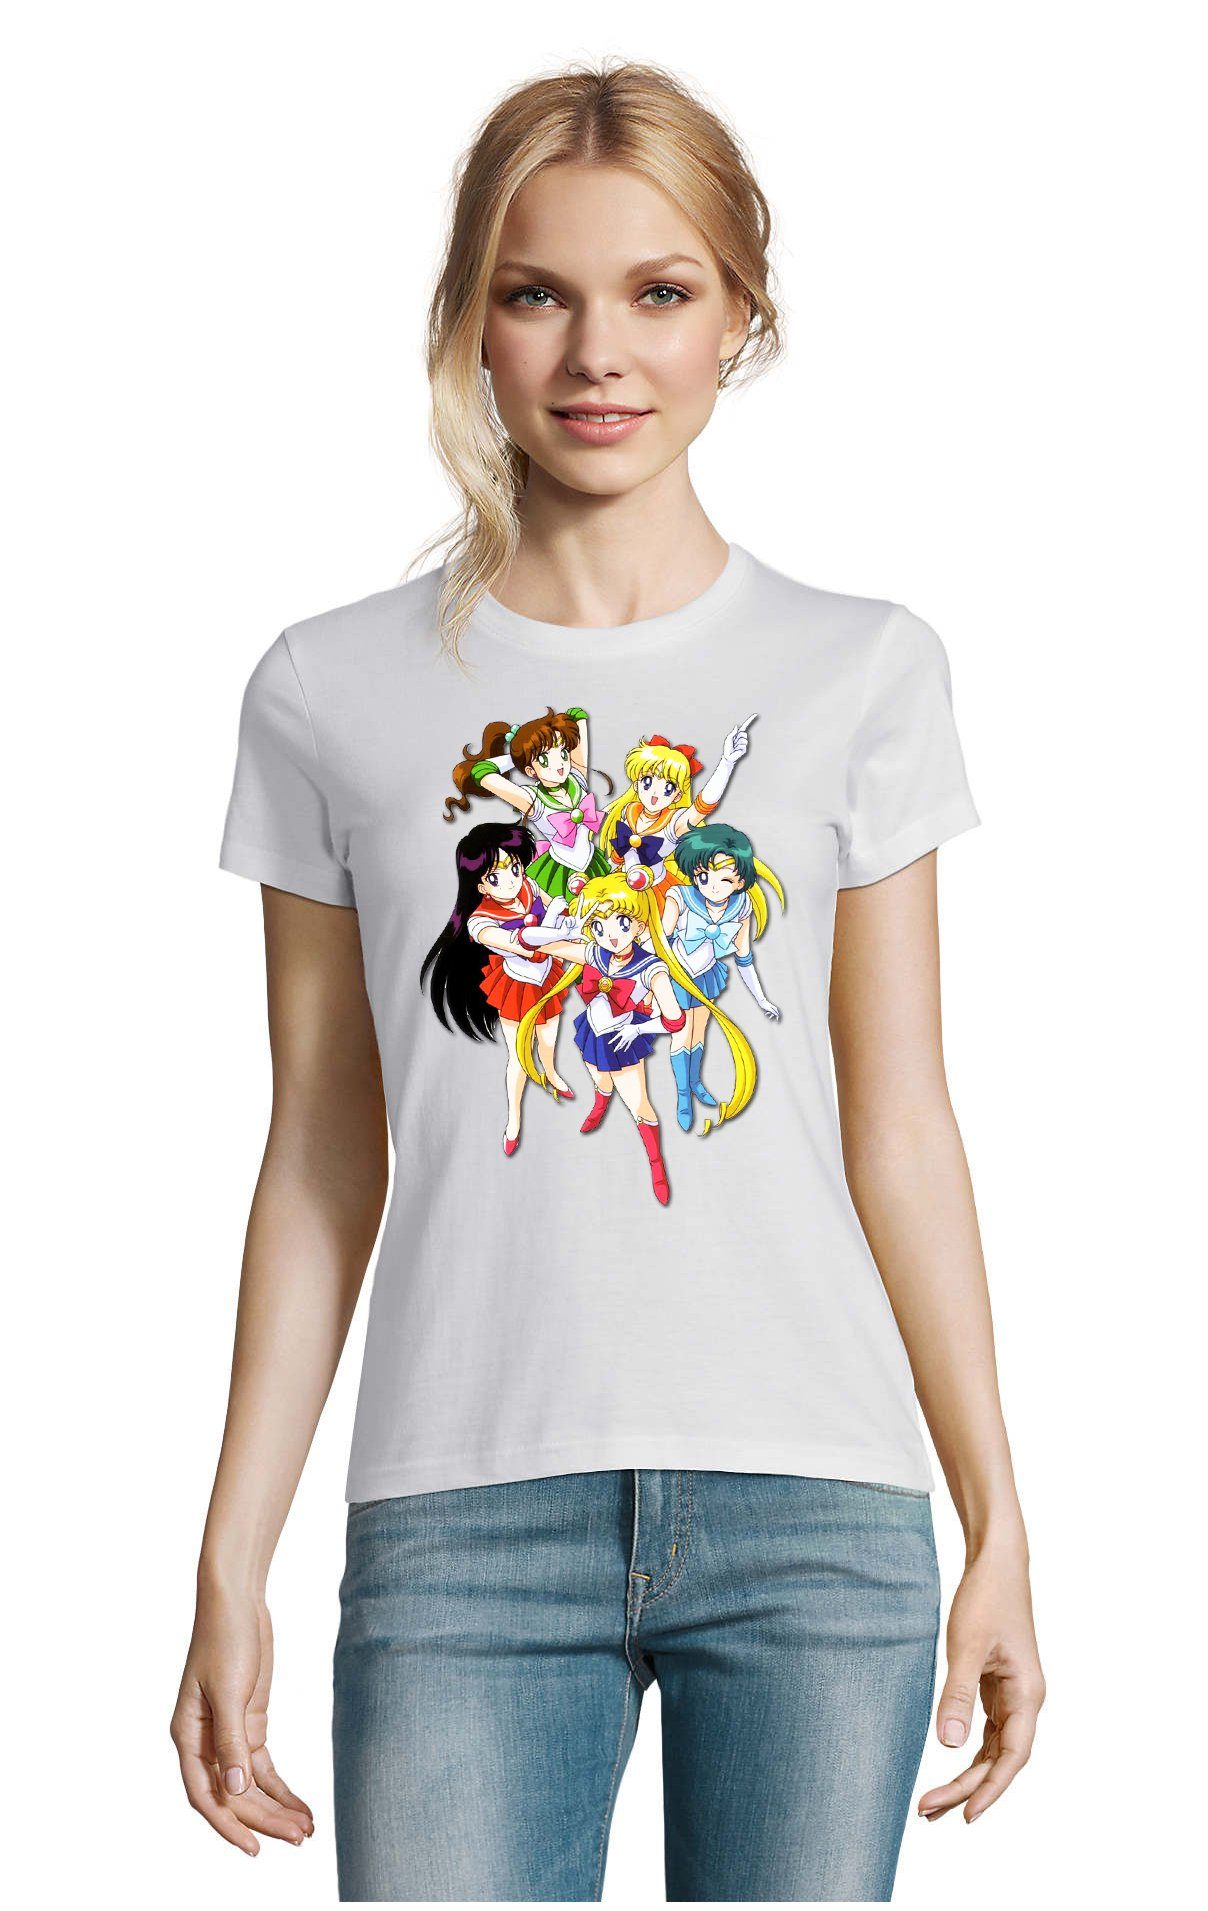 Blondie & Brownie T-Shirt Damen Fun Comic Sailor Moon and Friends Anime Manga Weiß